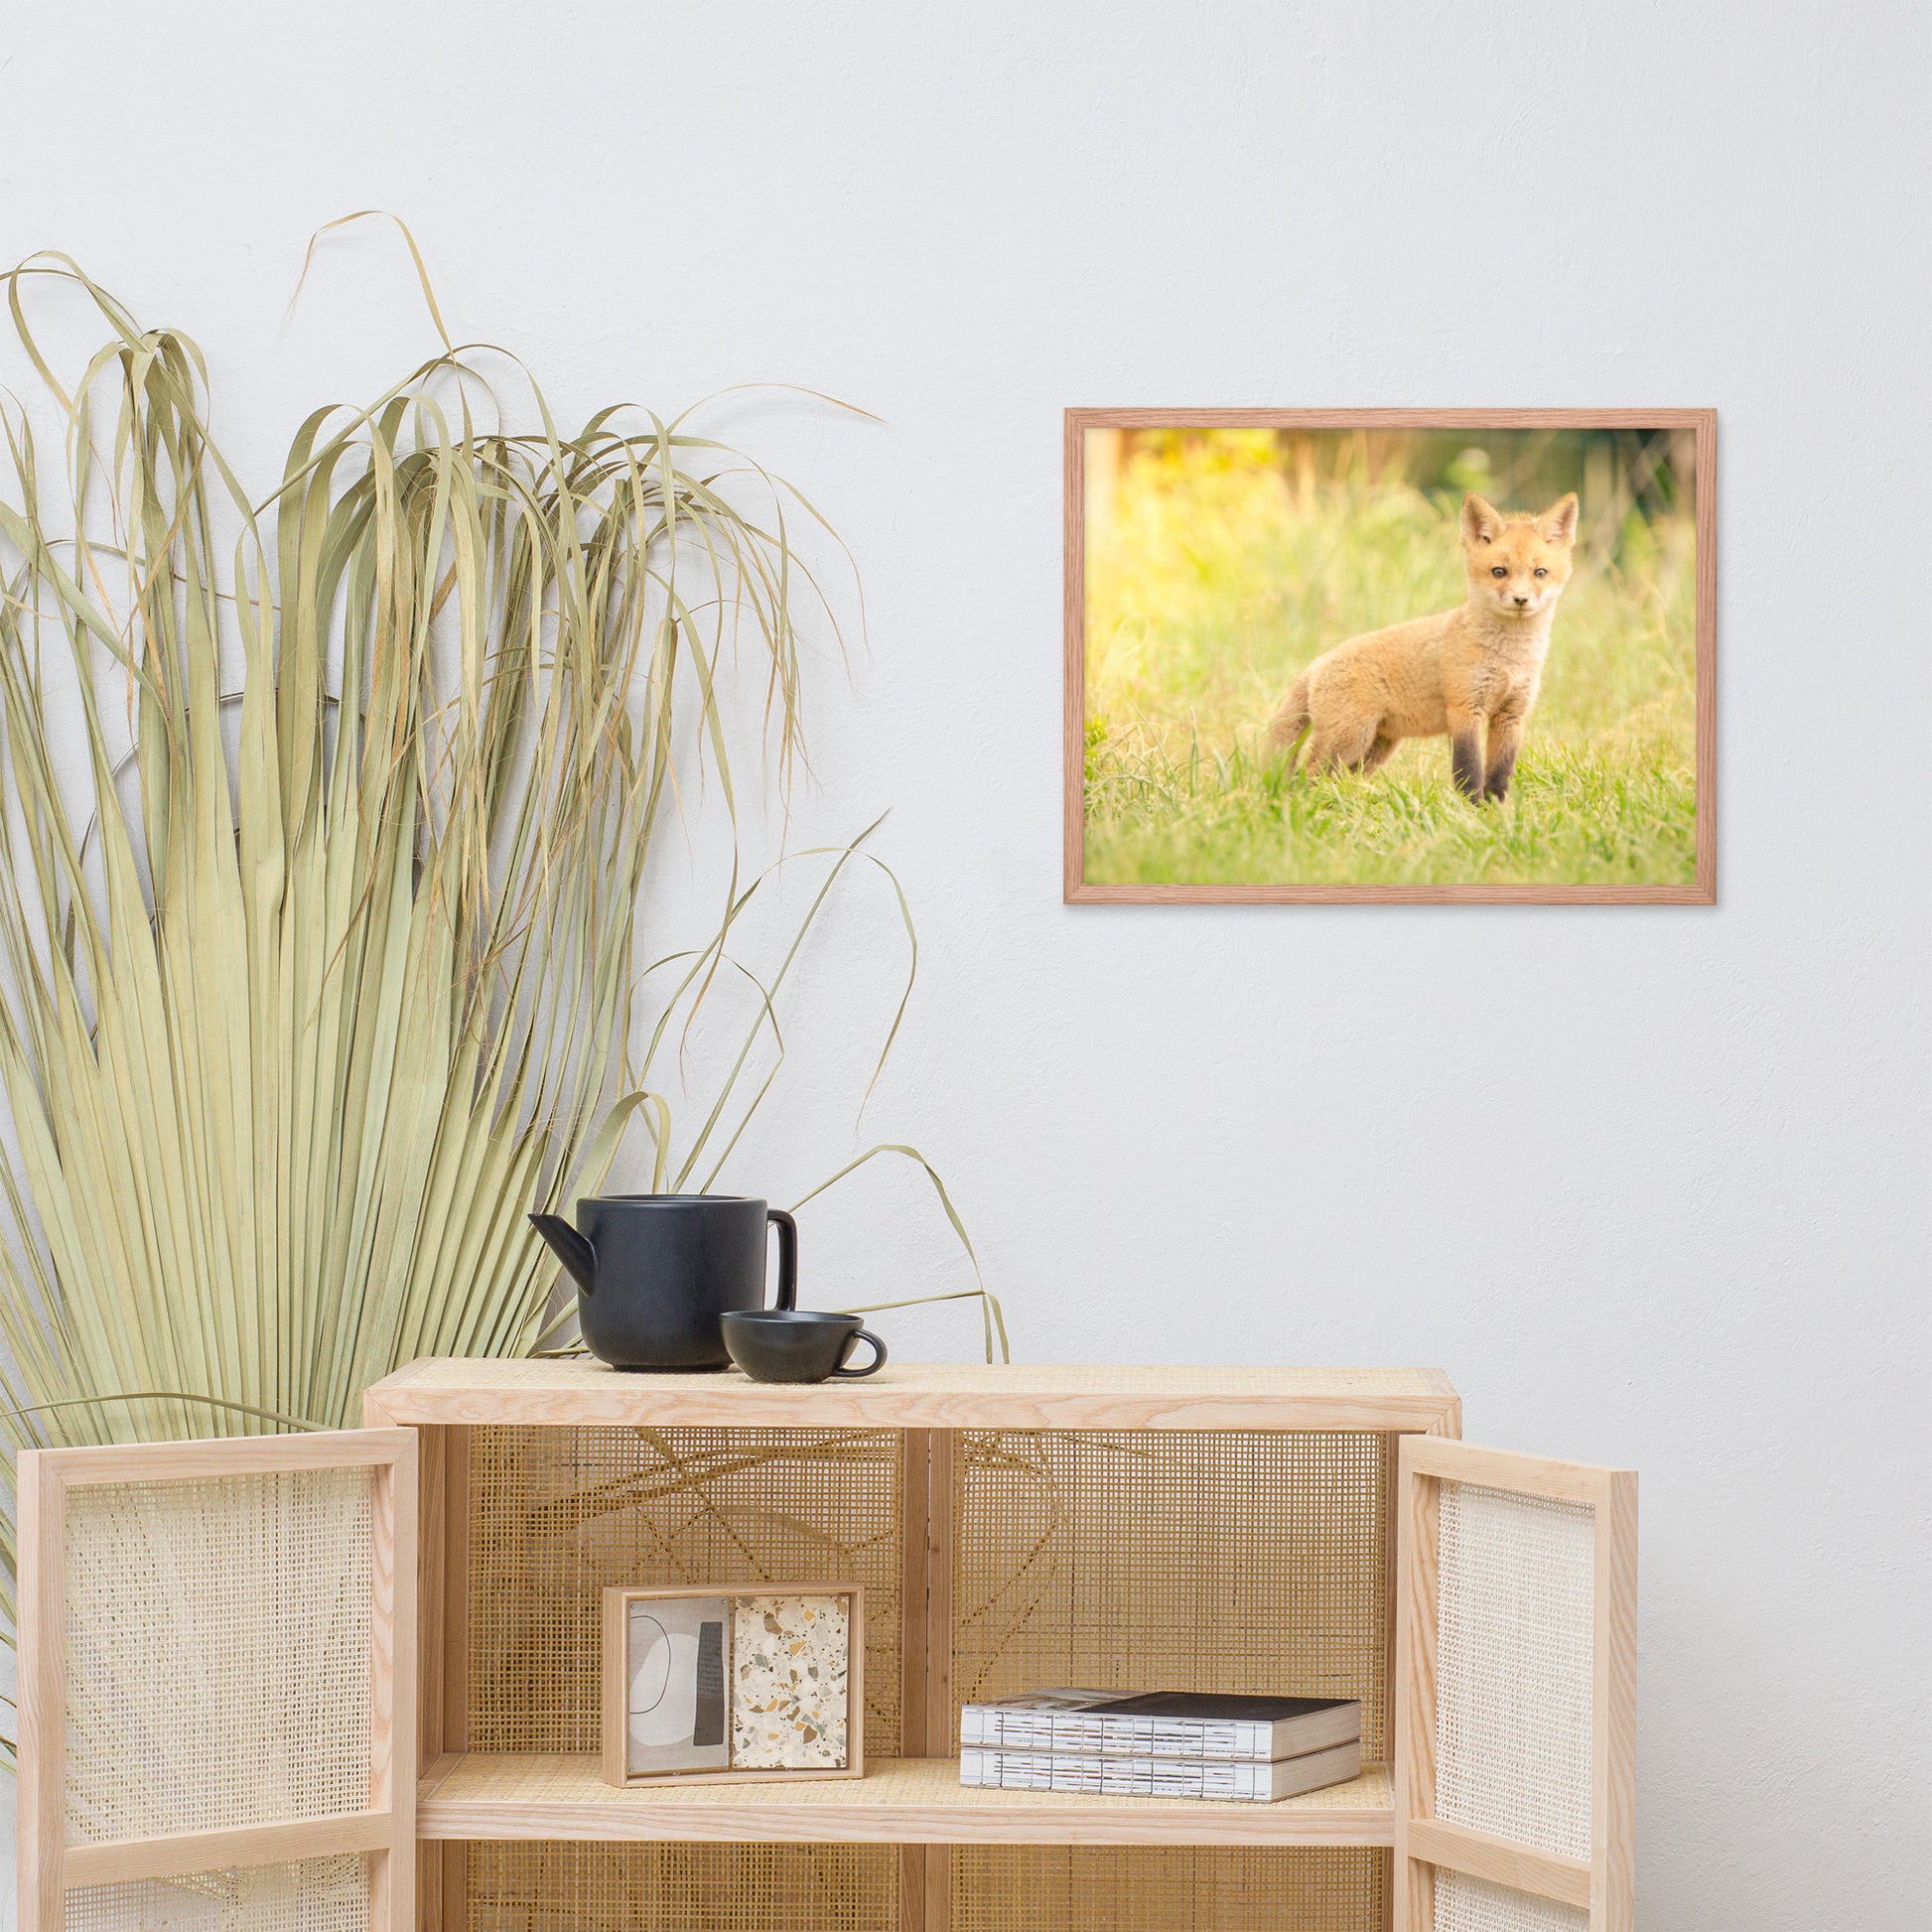 Best Nursery Wall Art: Baby Red Fox in the Sun - Animal / Wildlife / Nature Artwork - Wall Decor - Framed Wall Art Print